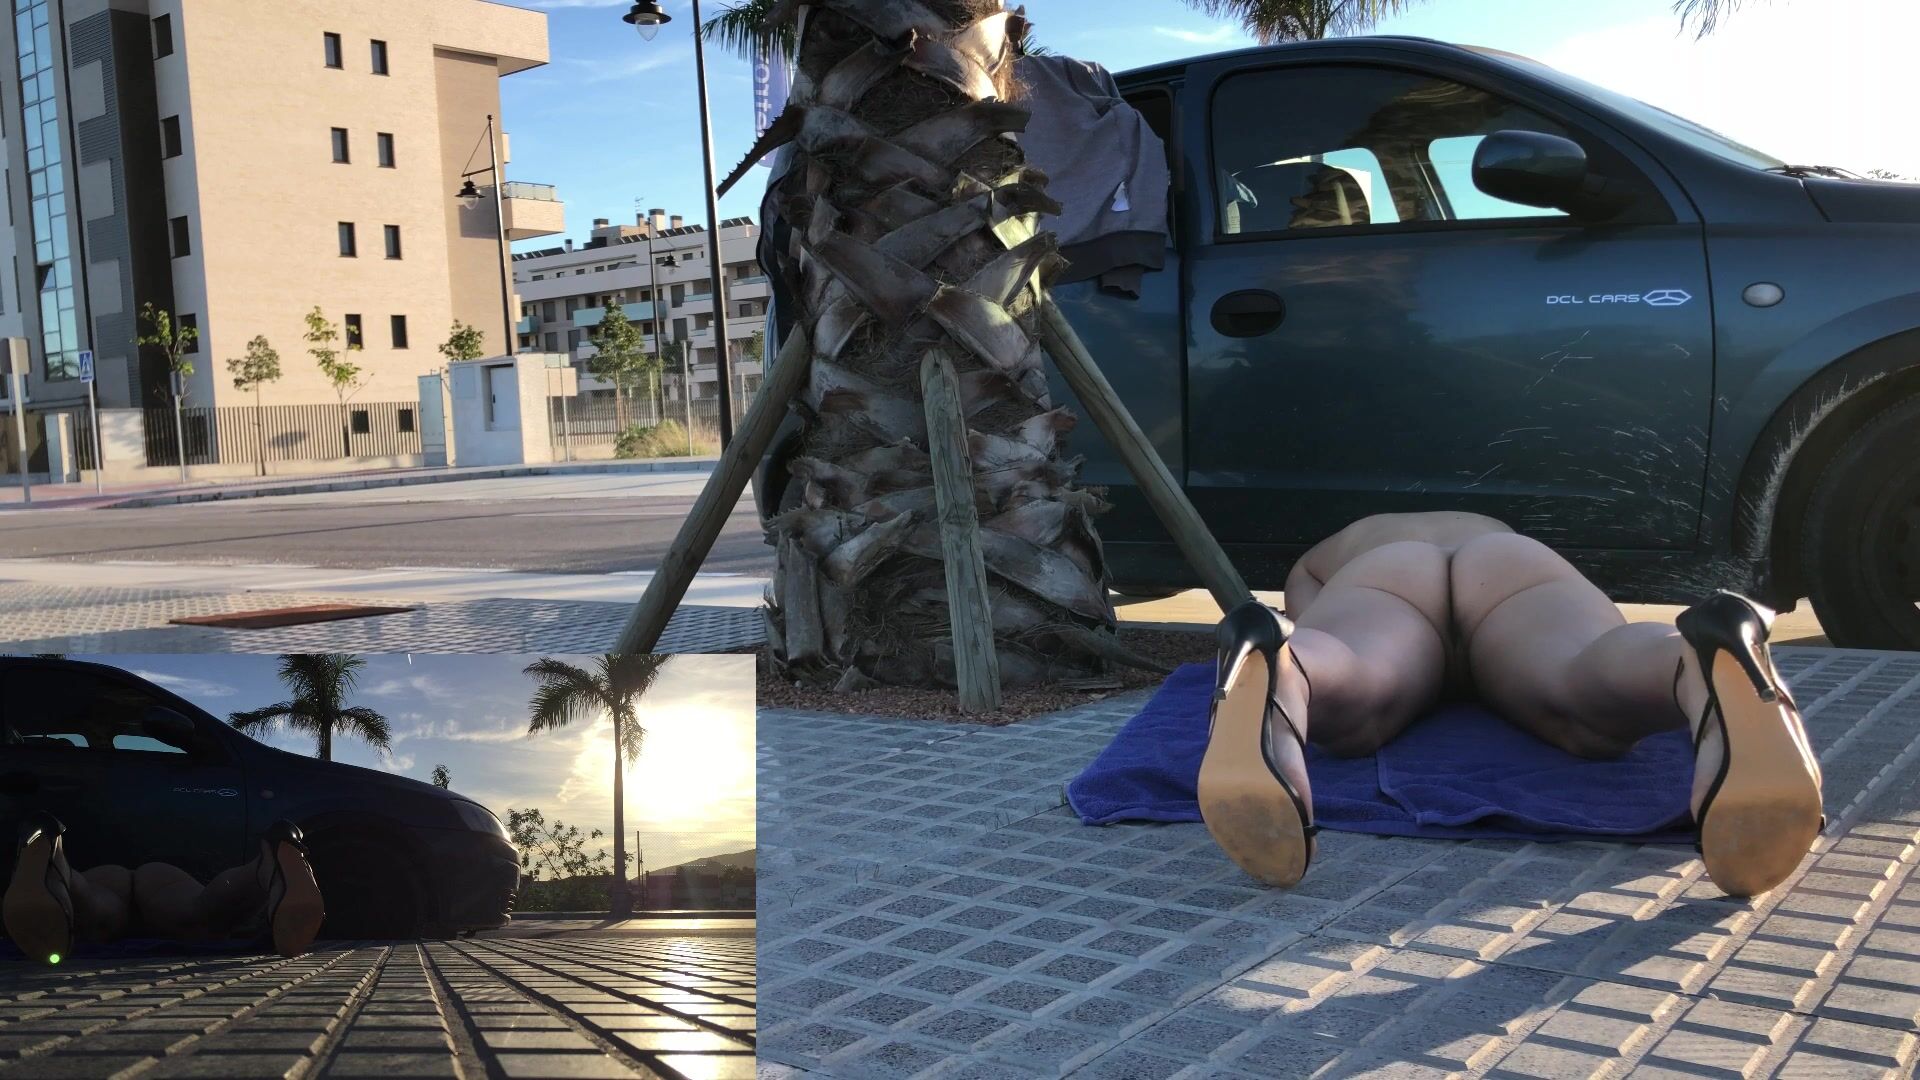 Laying Blindfolded In Sidewalk